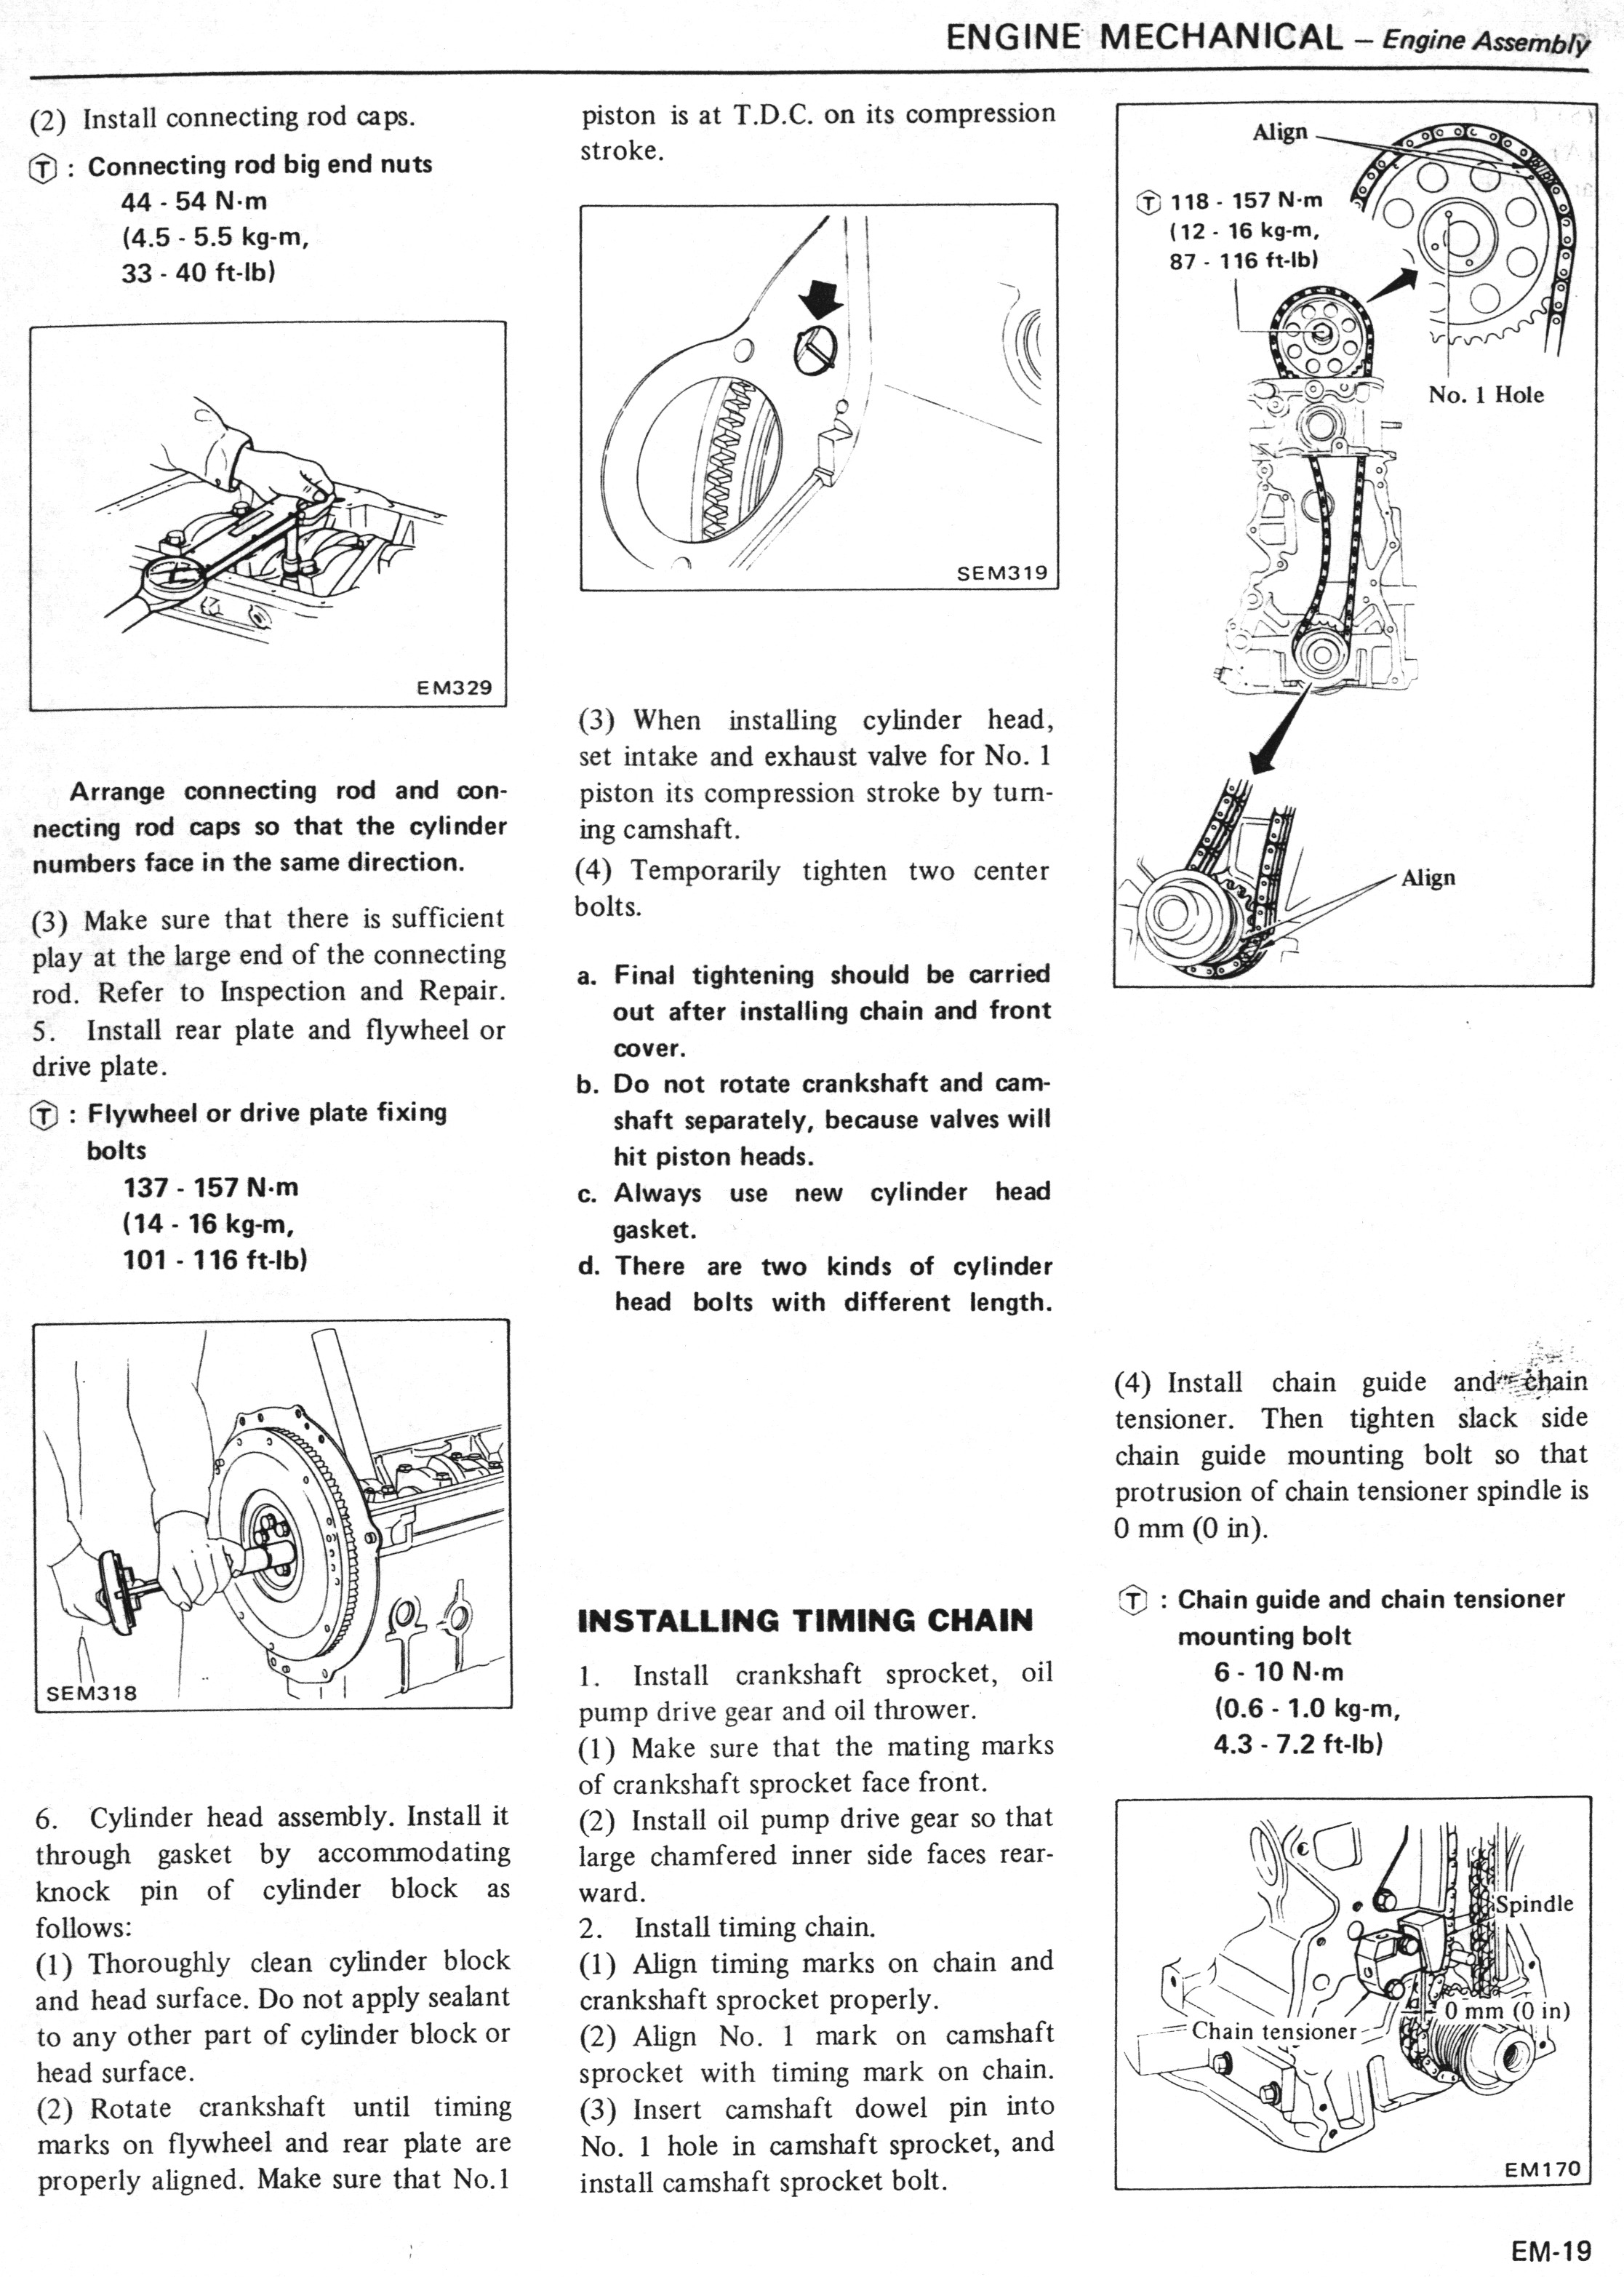 Manual nissan ld28 manual #7